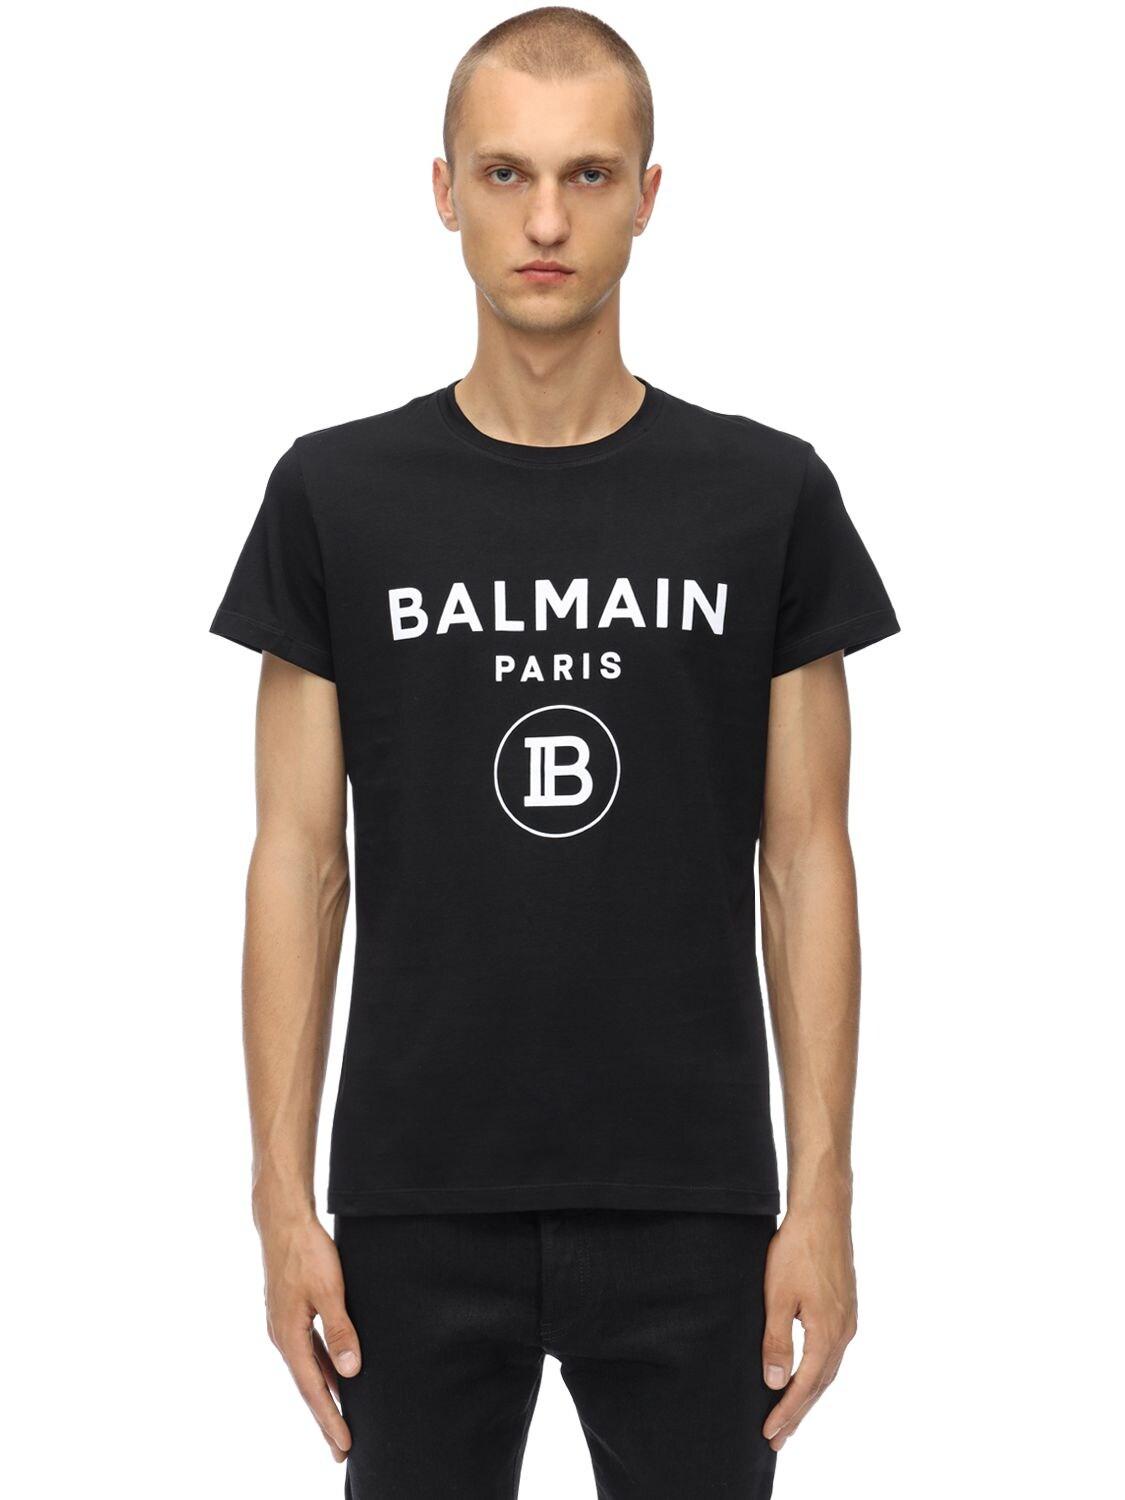 Balmain Paris Logo Print T-shirt in Black for Men - Save 64% - Lyst